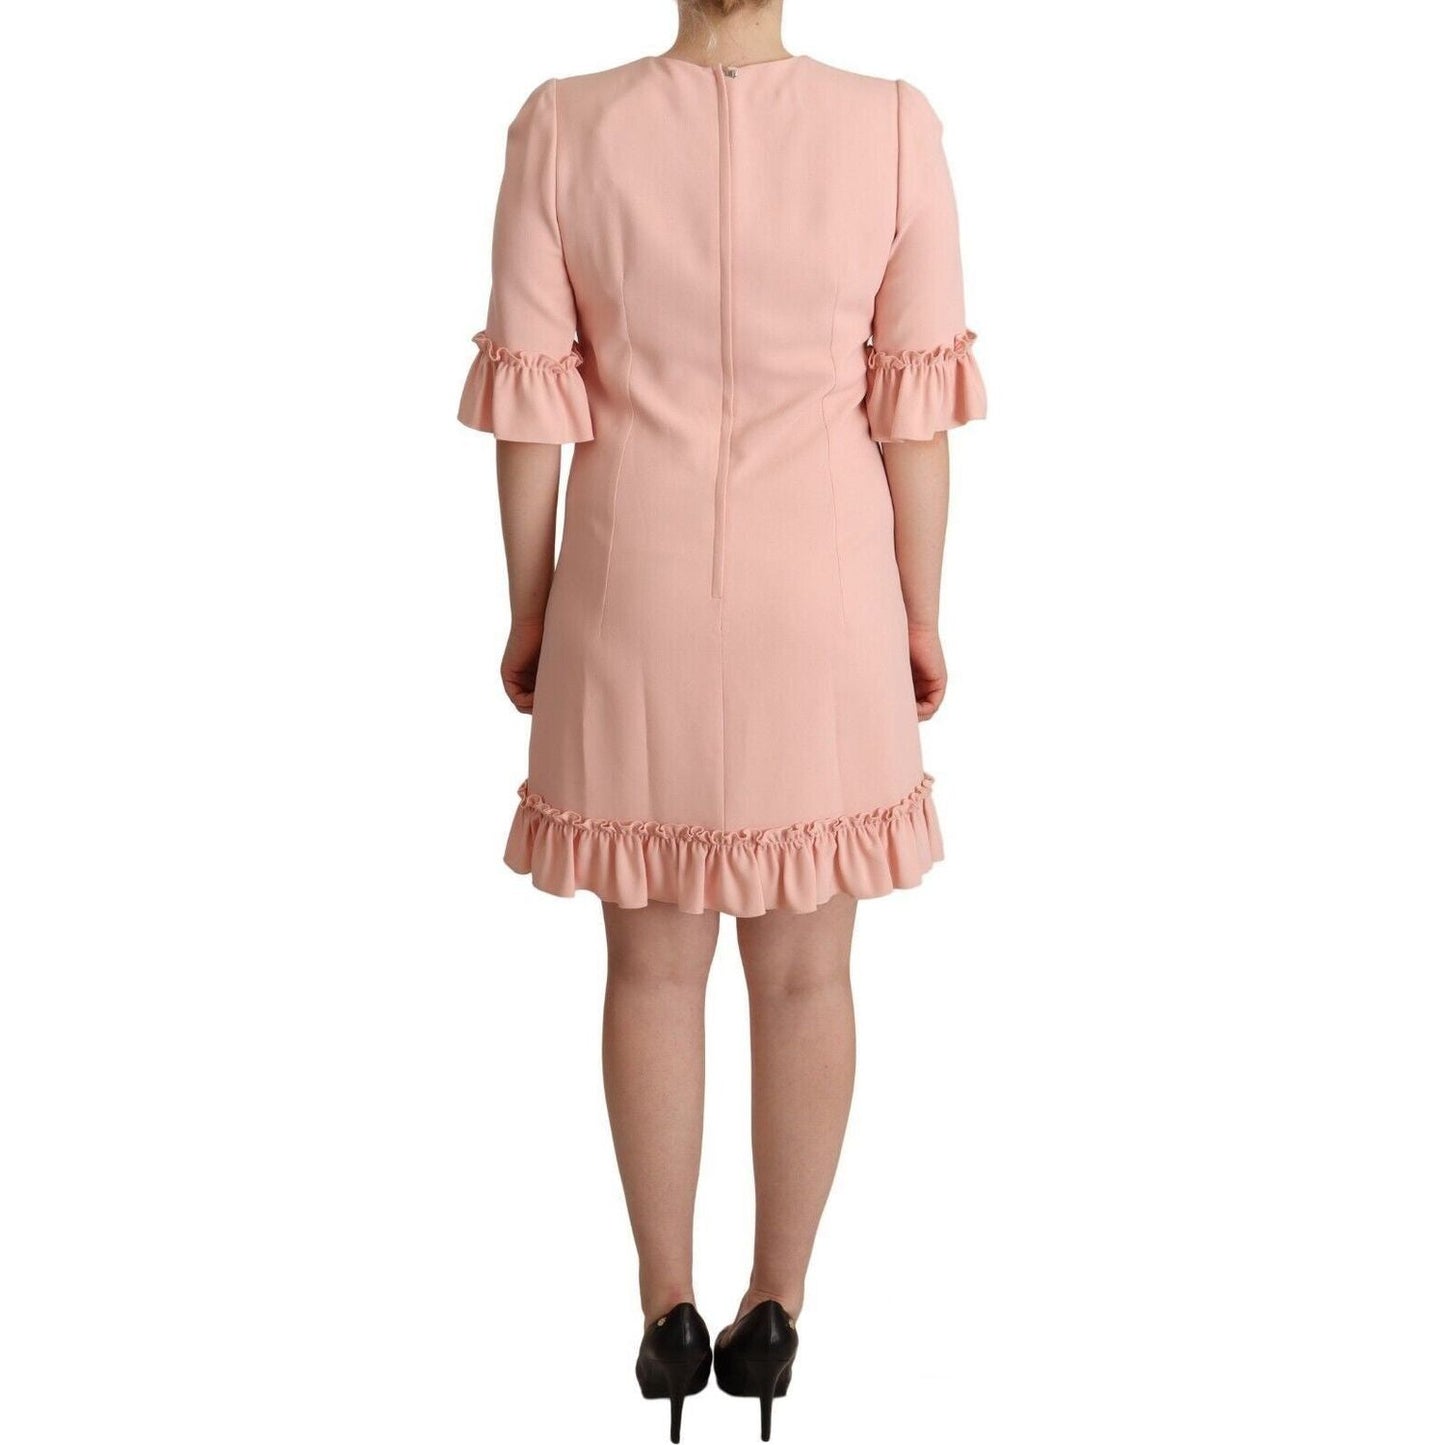 Dolce & GabbanaRuffled Sleeve Sheath Dress in PinkMcRichard Designer Brands£849.00